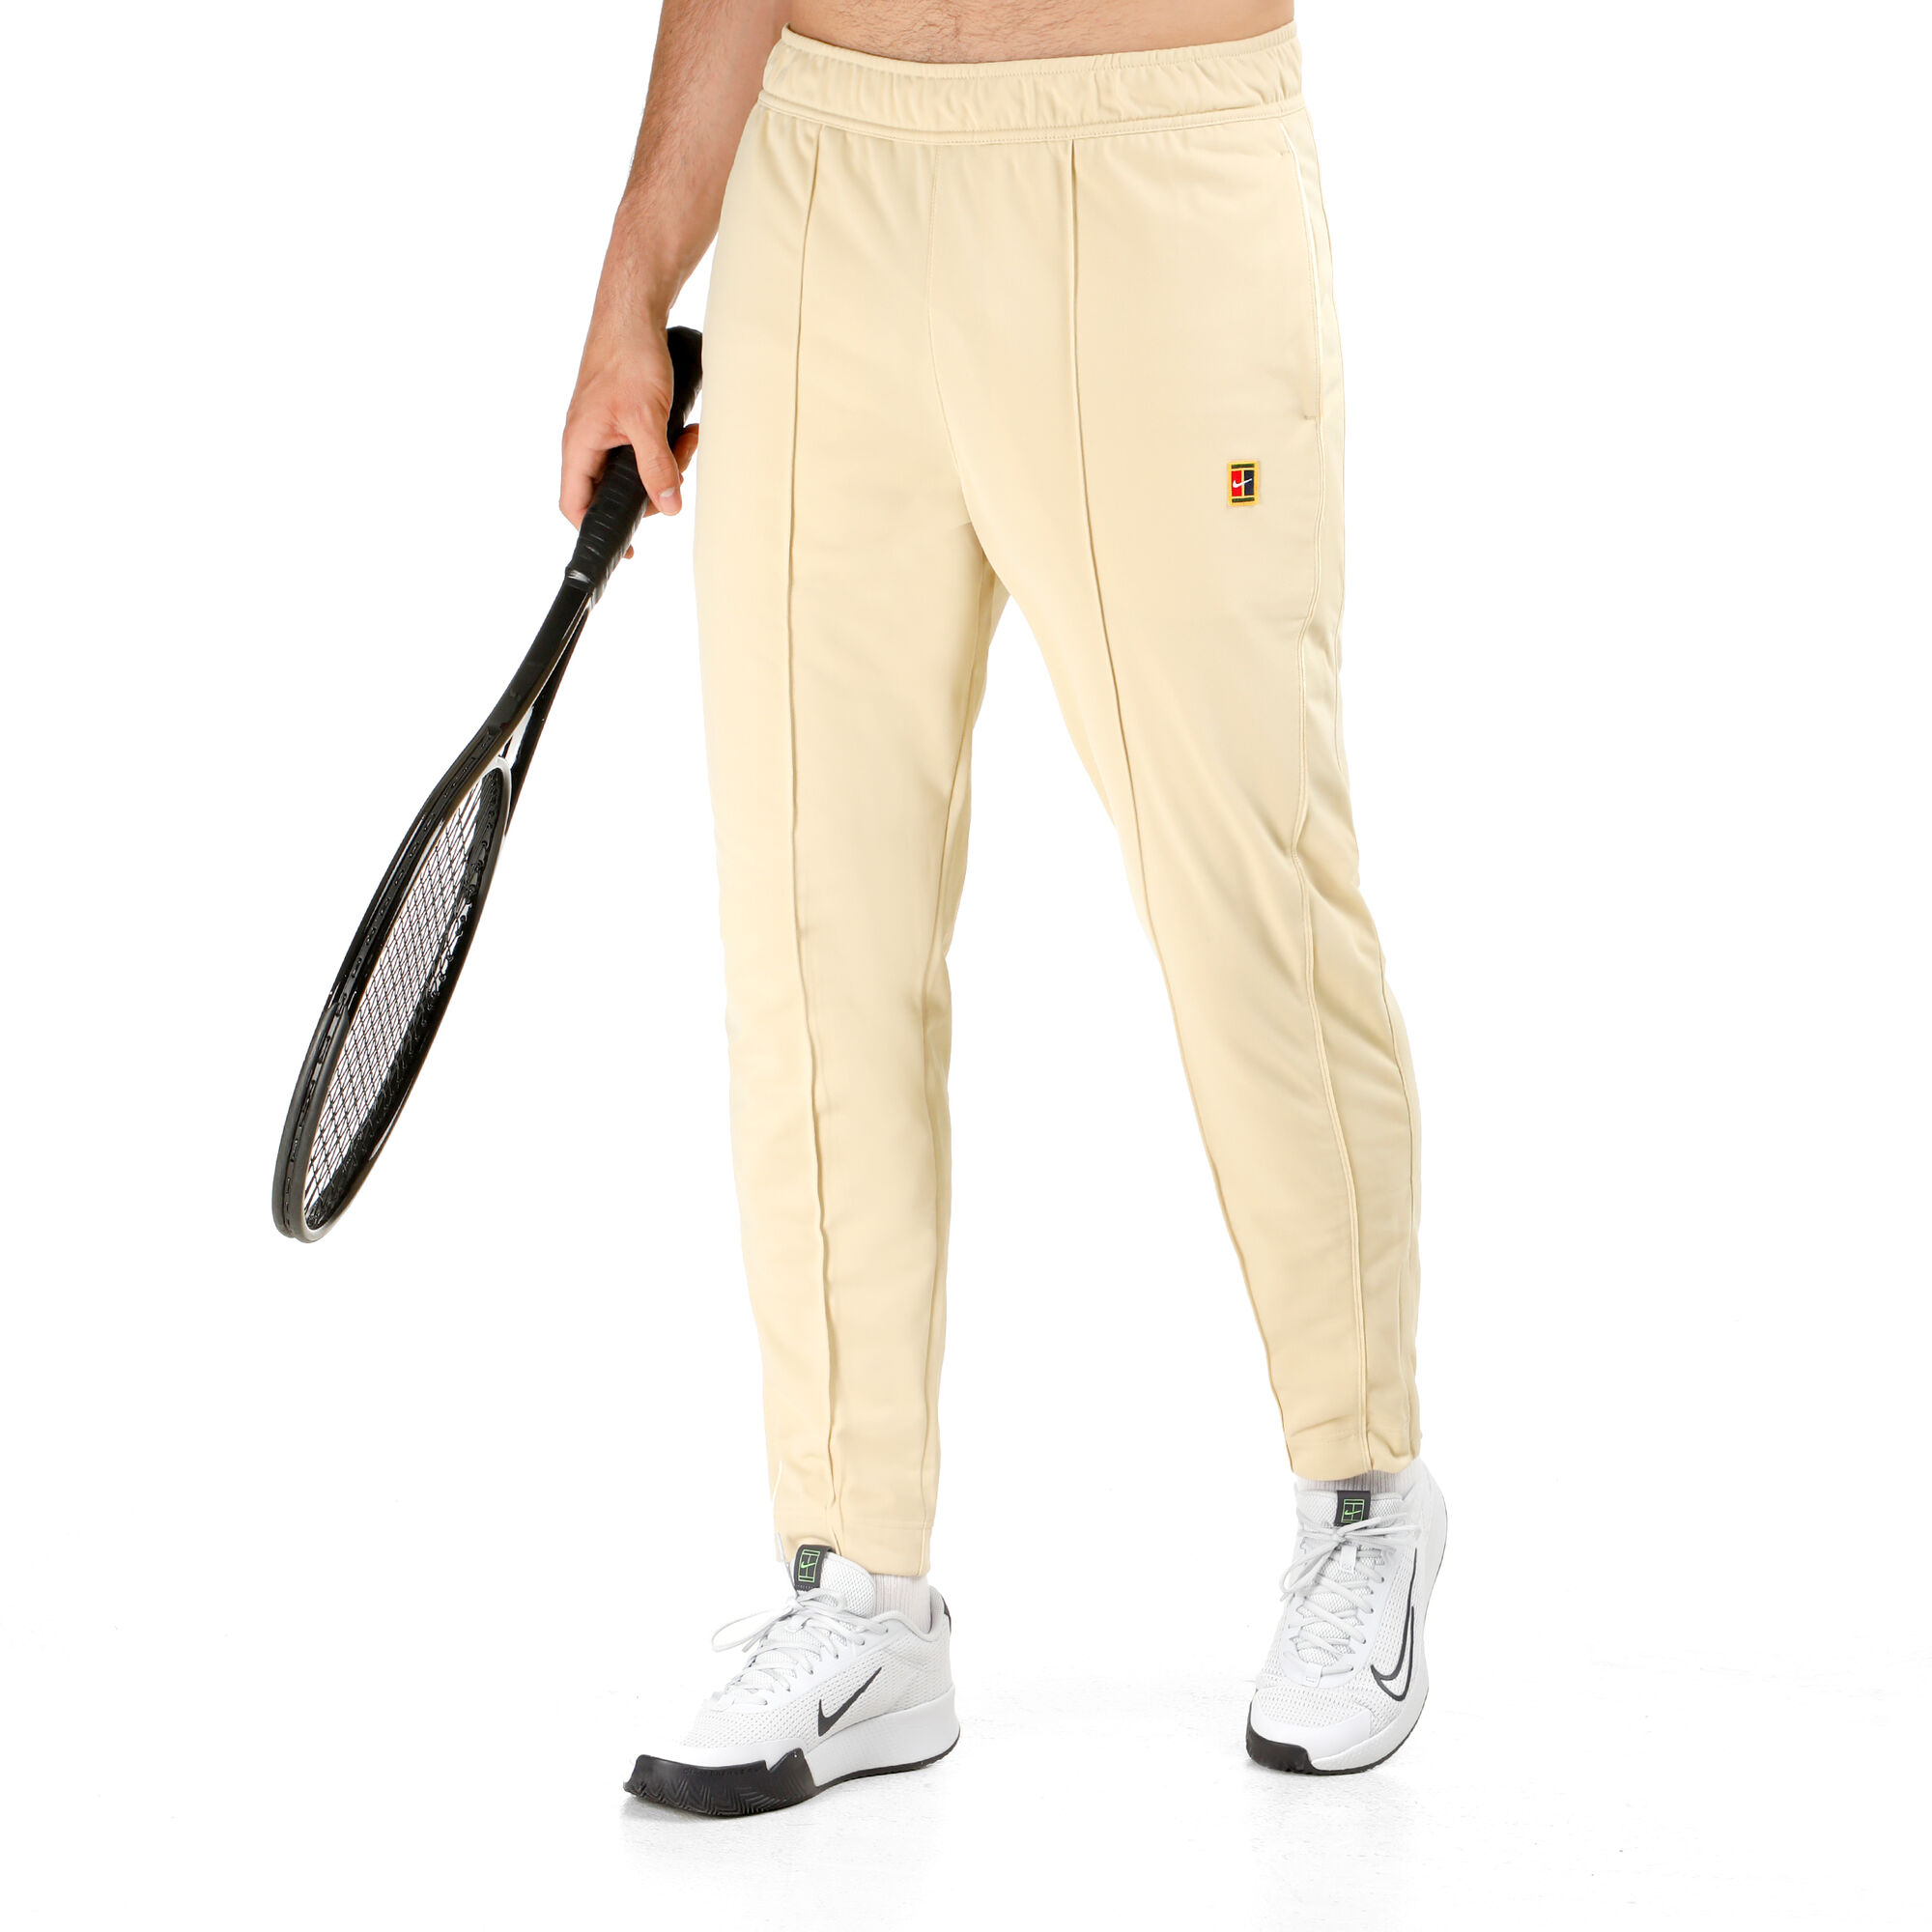 Buy Nike Court Heritage Suit Training Pants Men Yellow online